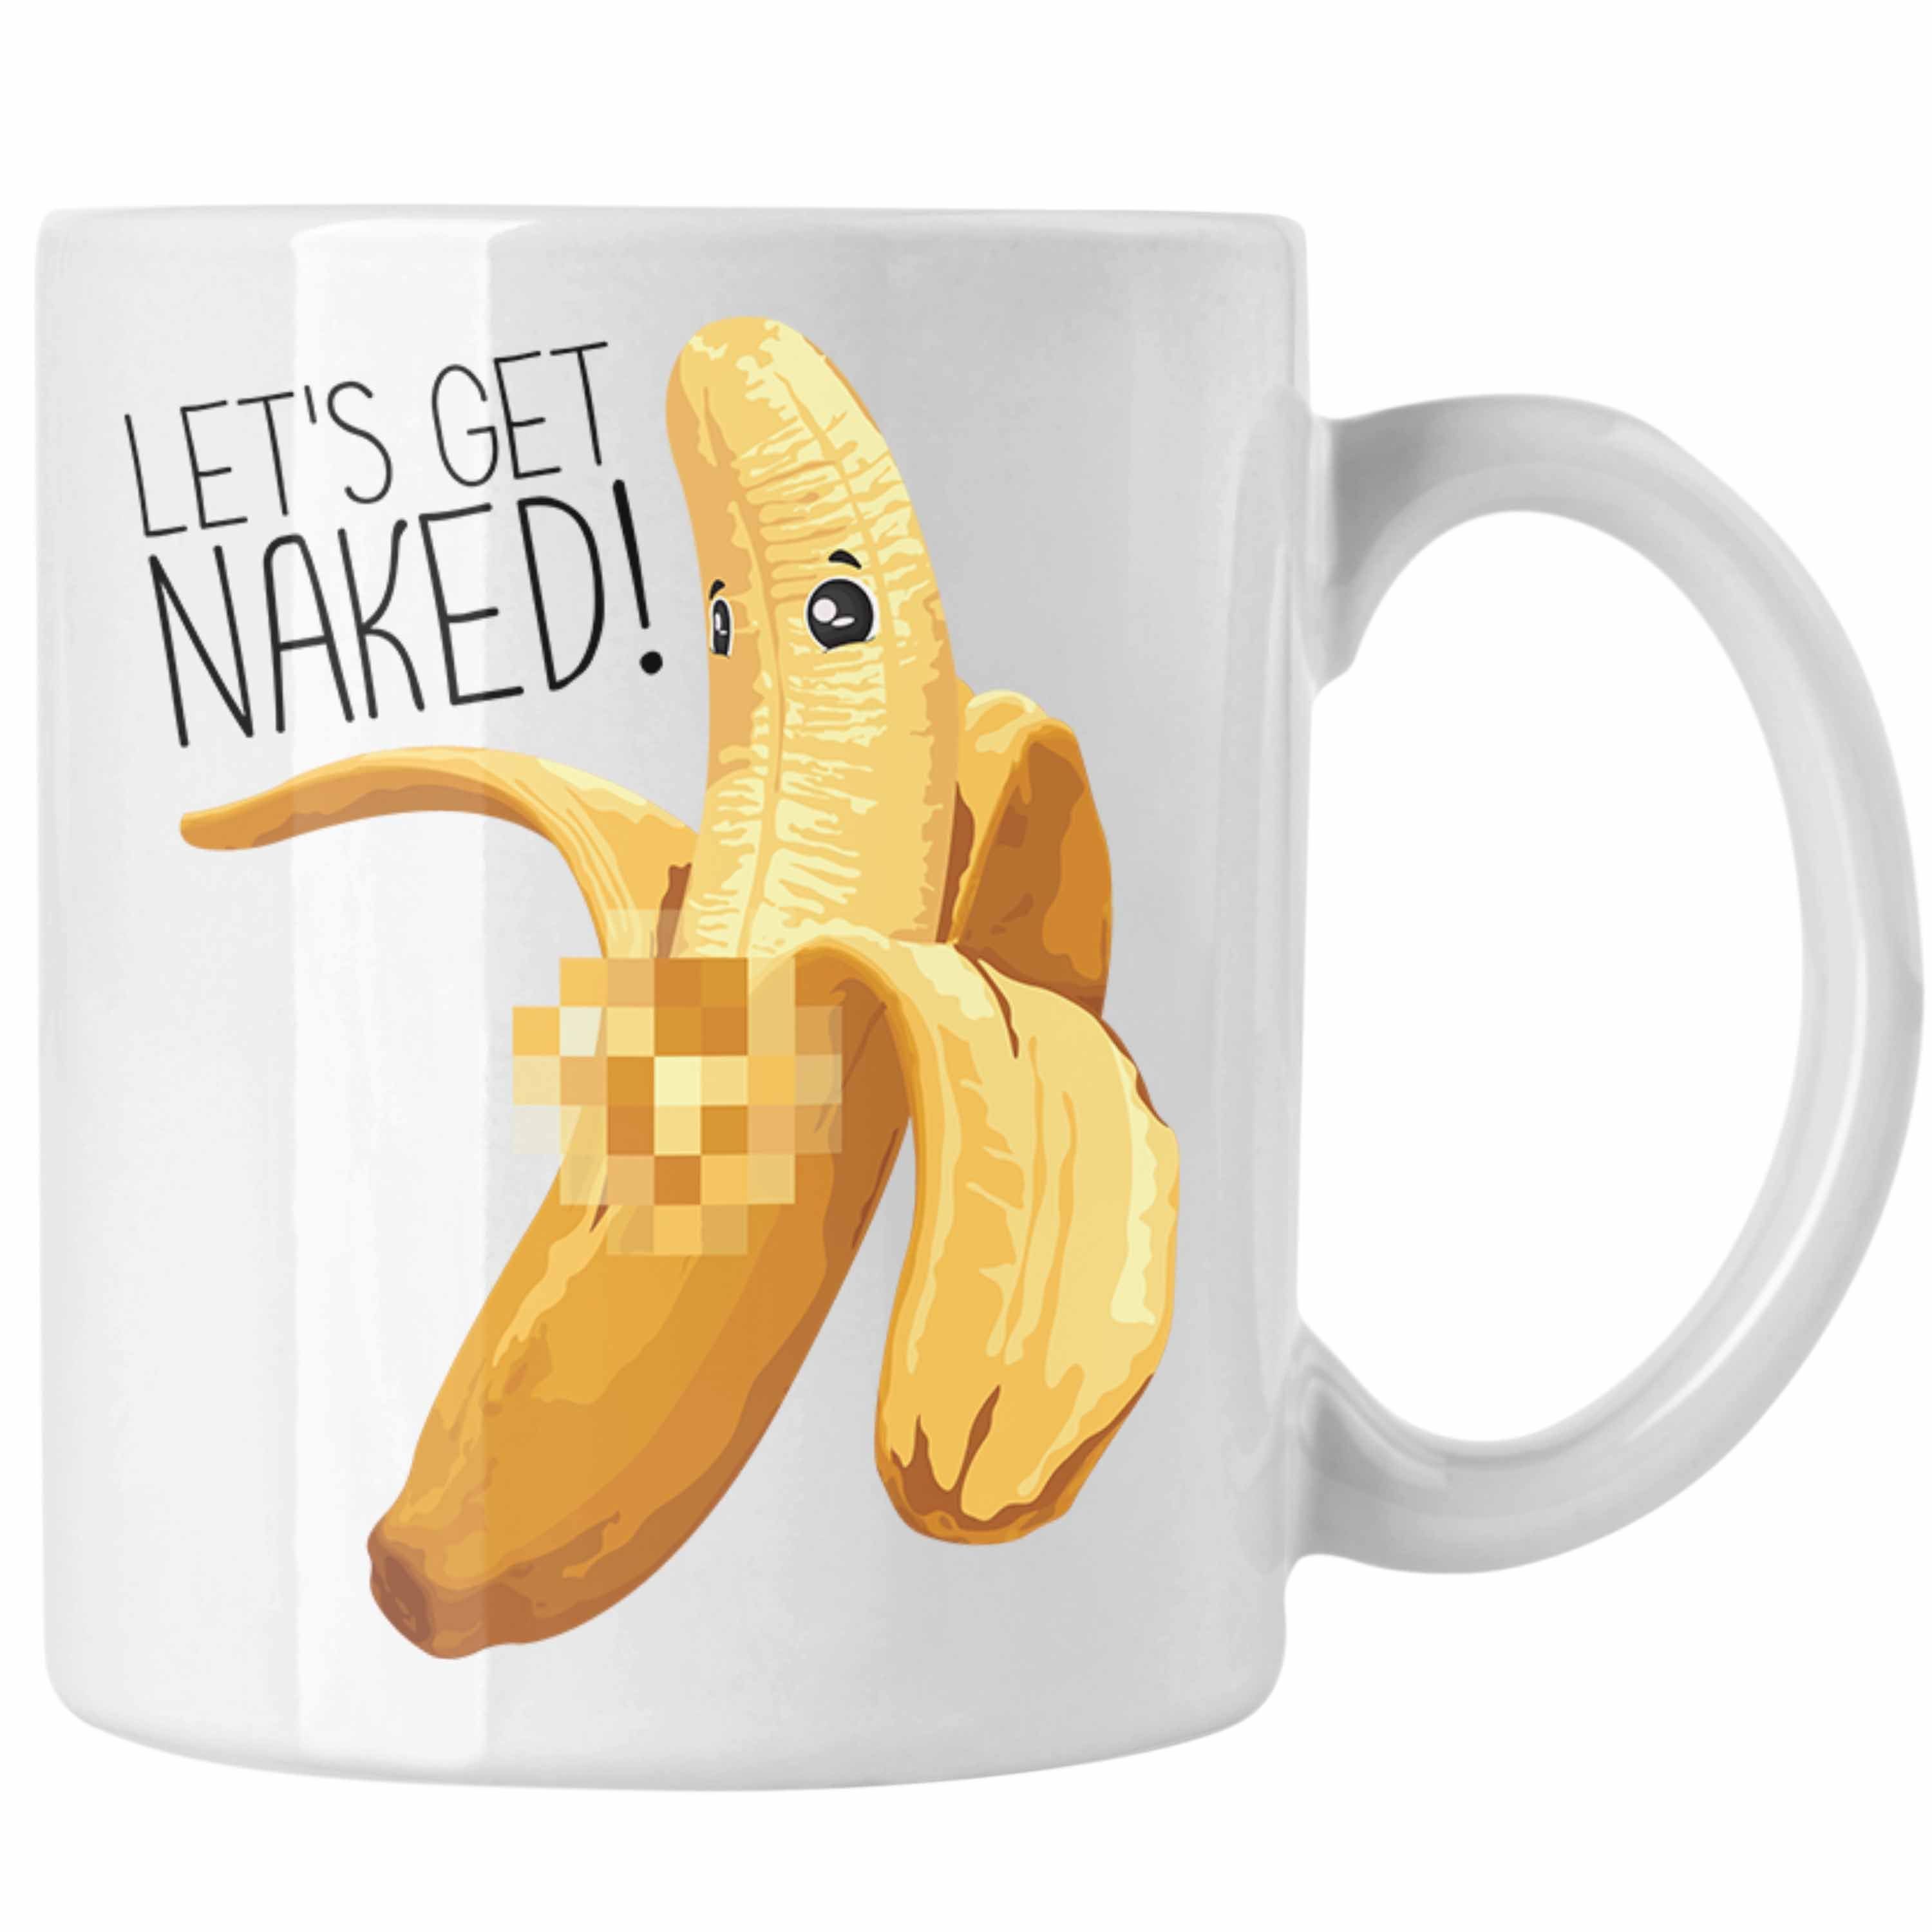 Trendation Tasse Banane Lets Get Naked Tasse Geschenk Striptease Erwachsener Humor Bech Weiss | Teetassen